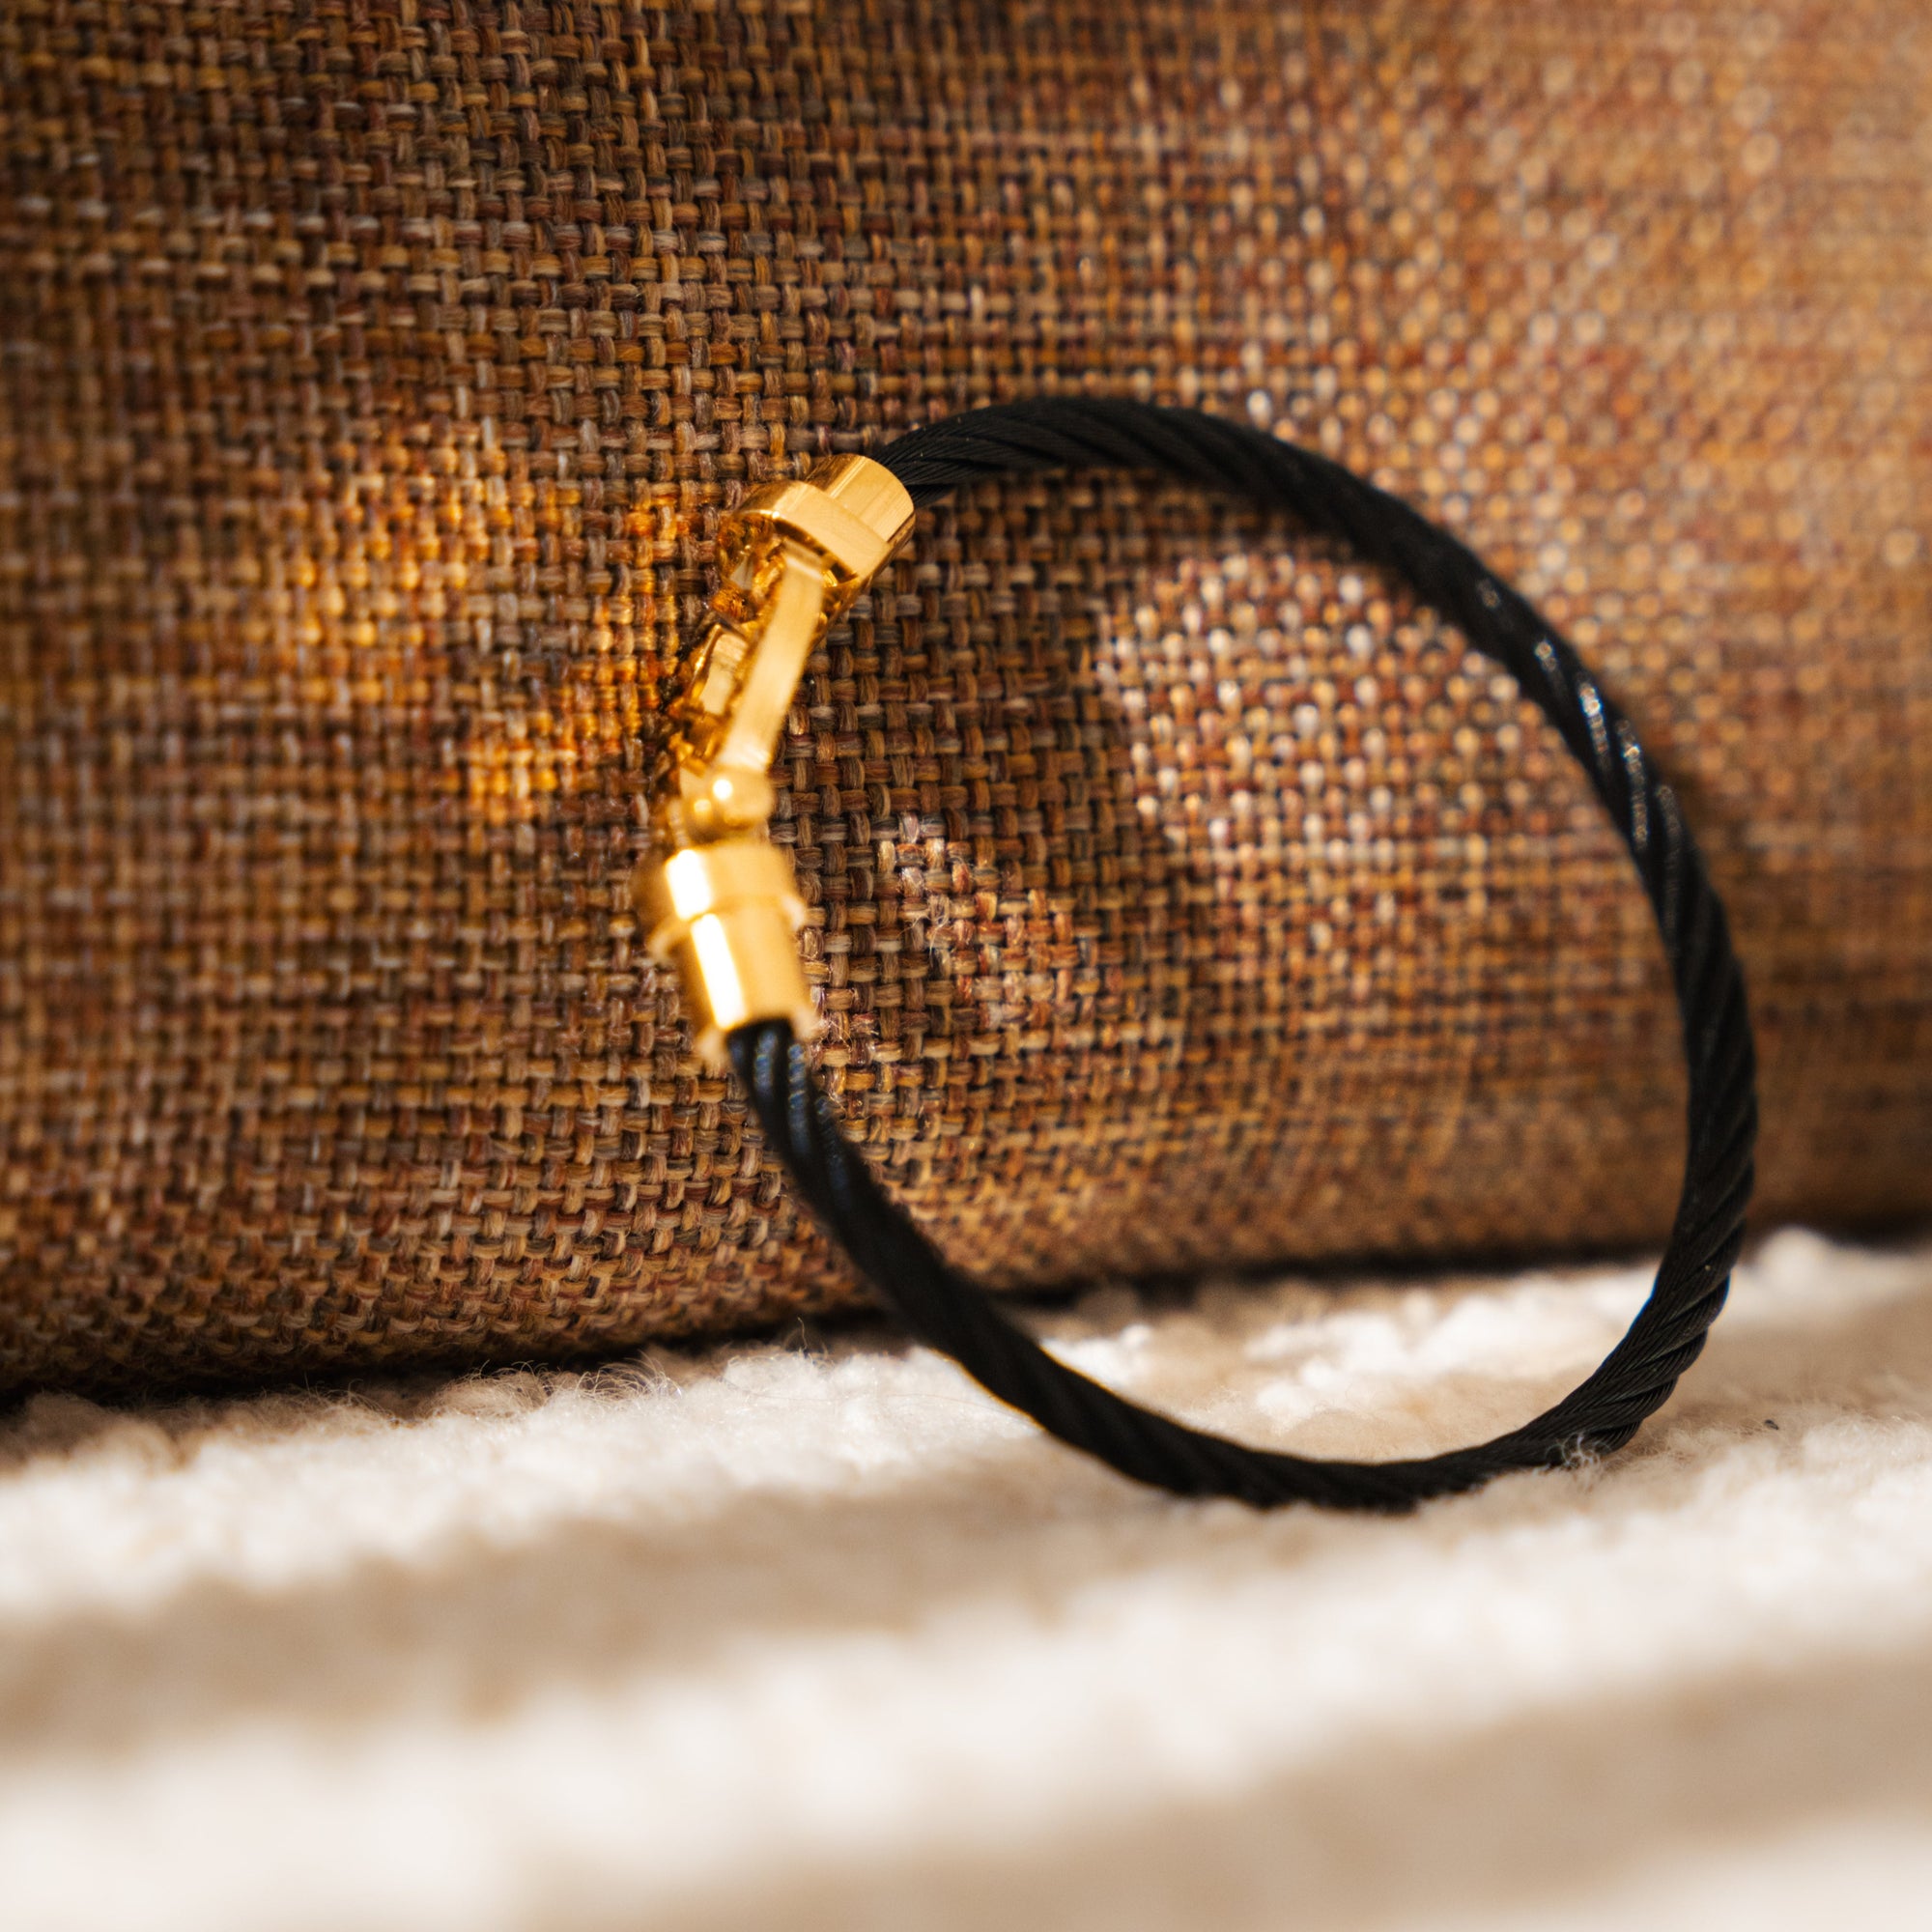 Core bracelet (black with gold)